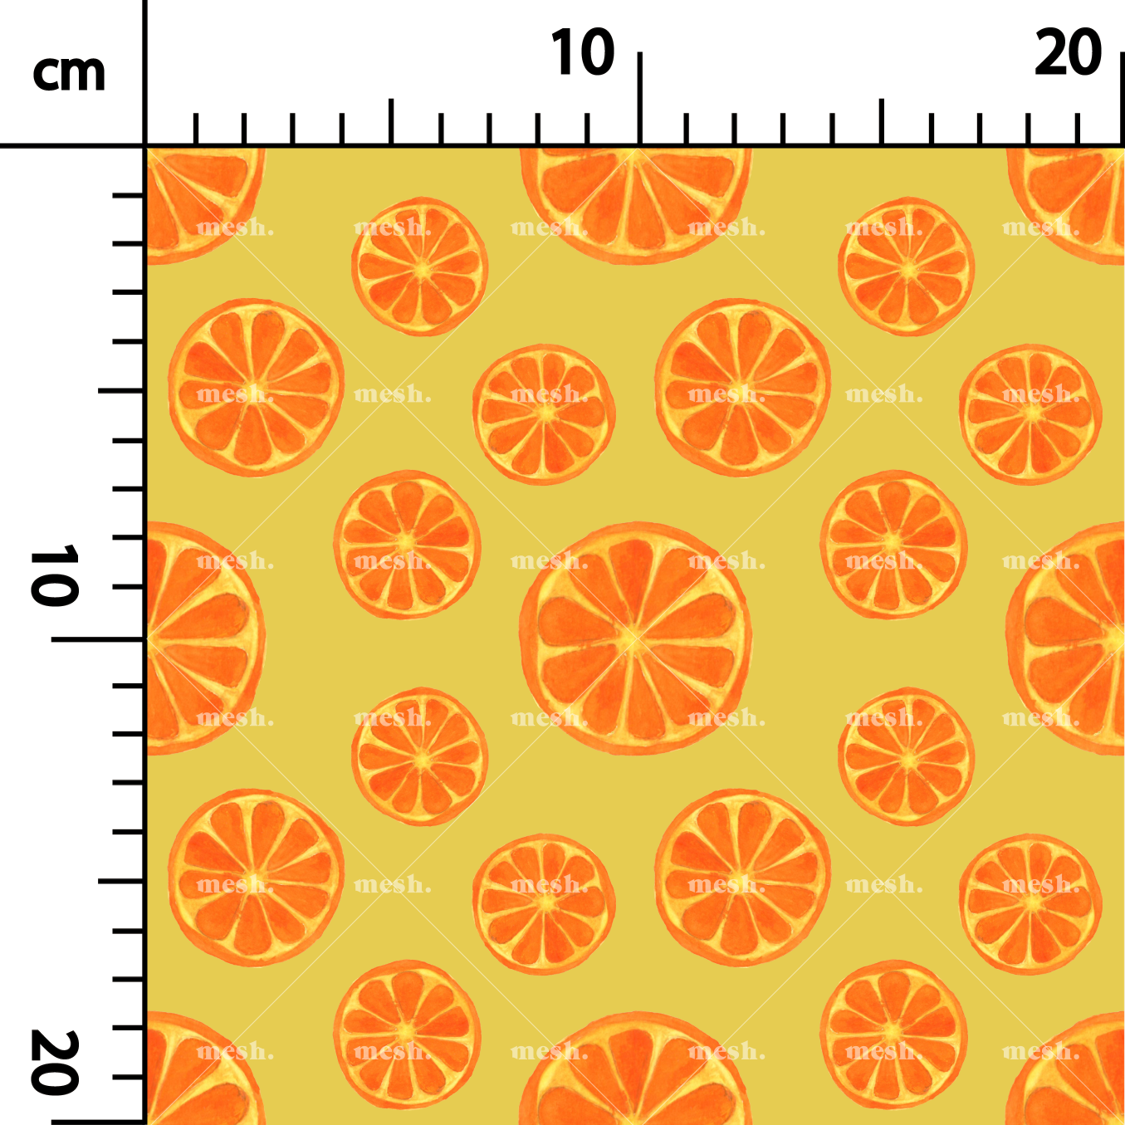 129. Multiple oranges in yellow